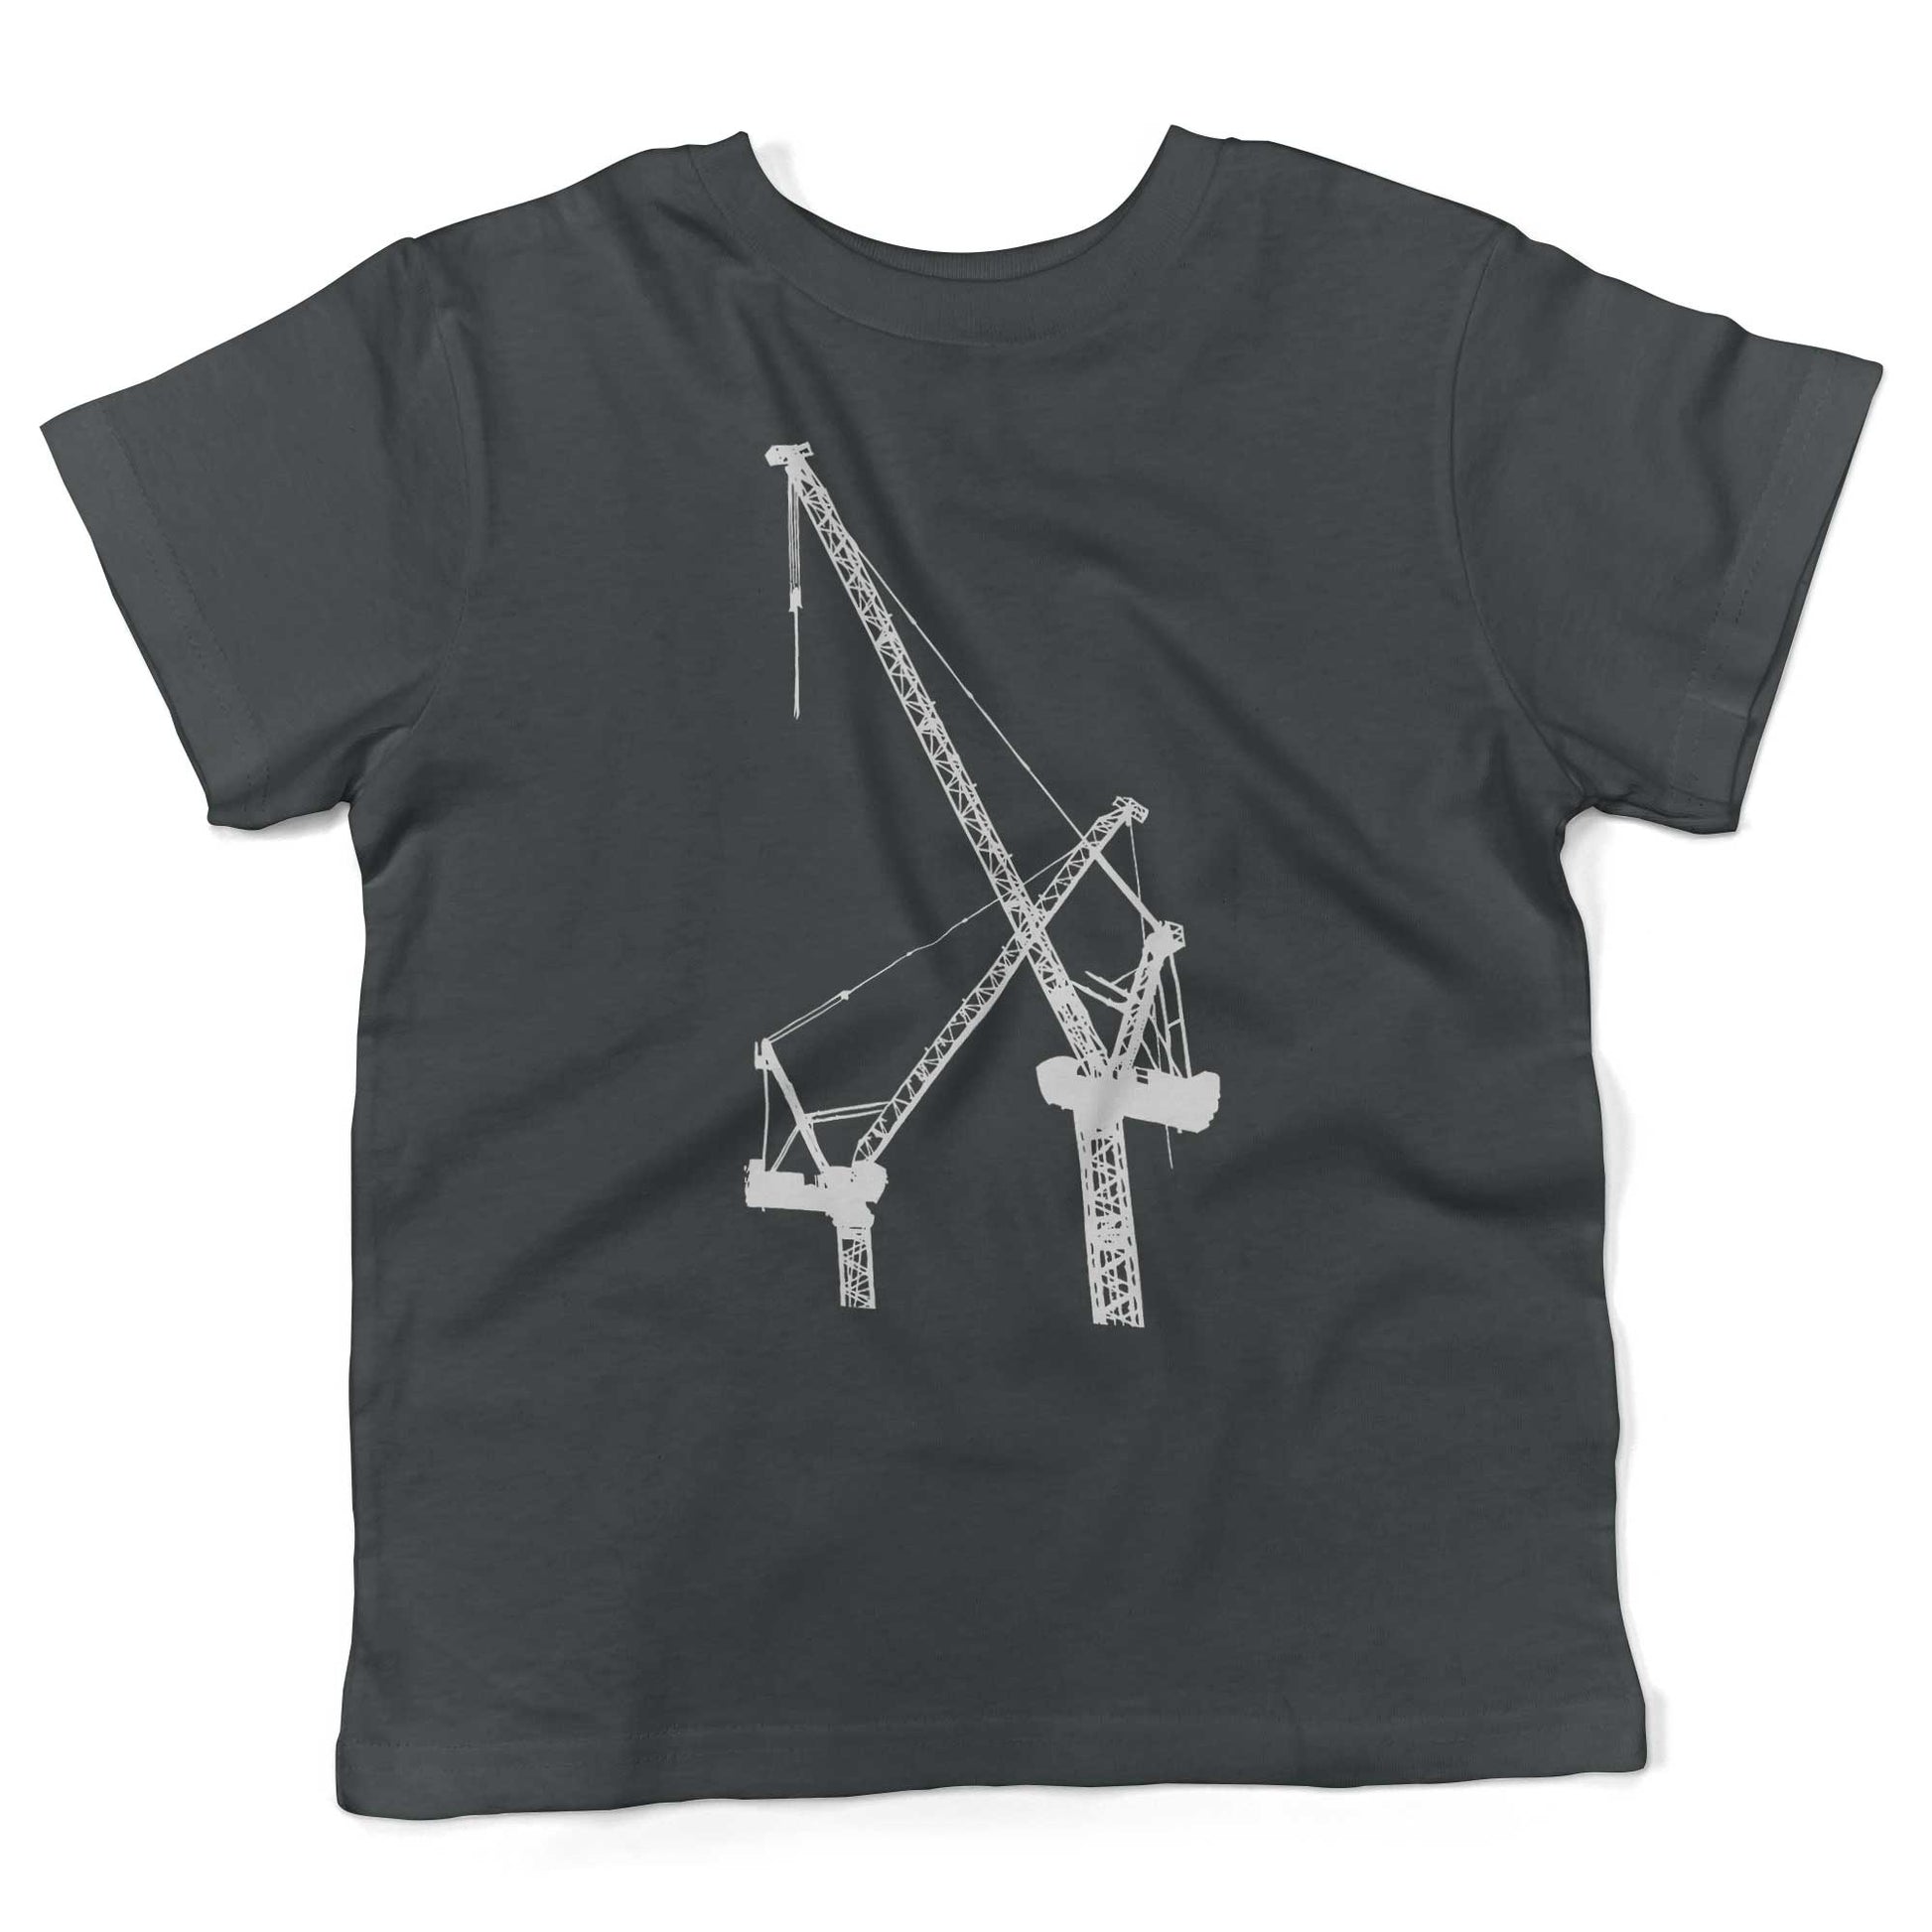 Construction Cranes Toddler Shirt-Asphalt-2T